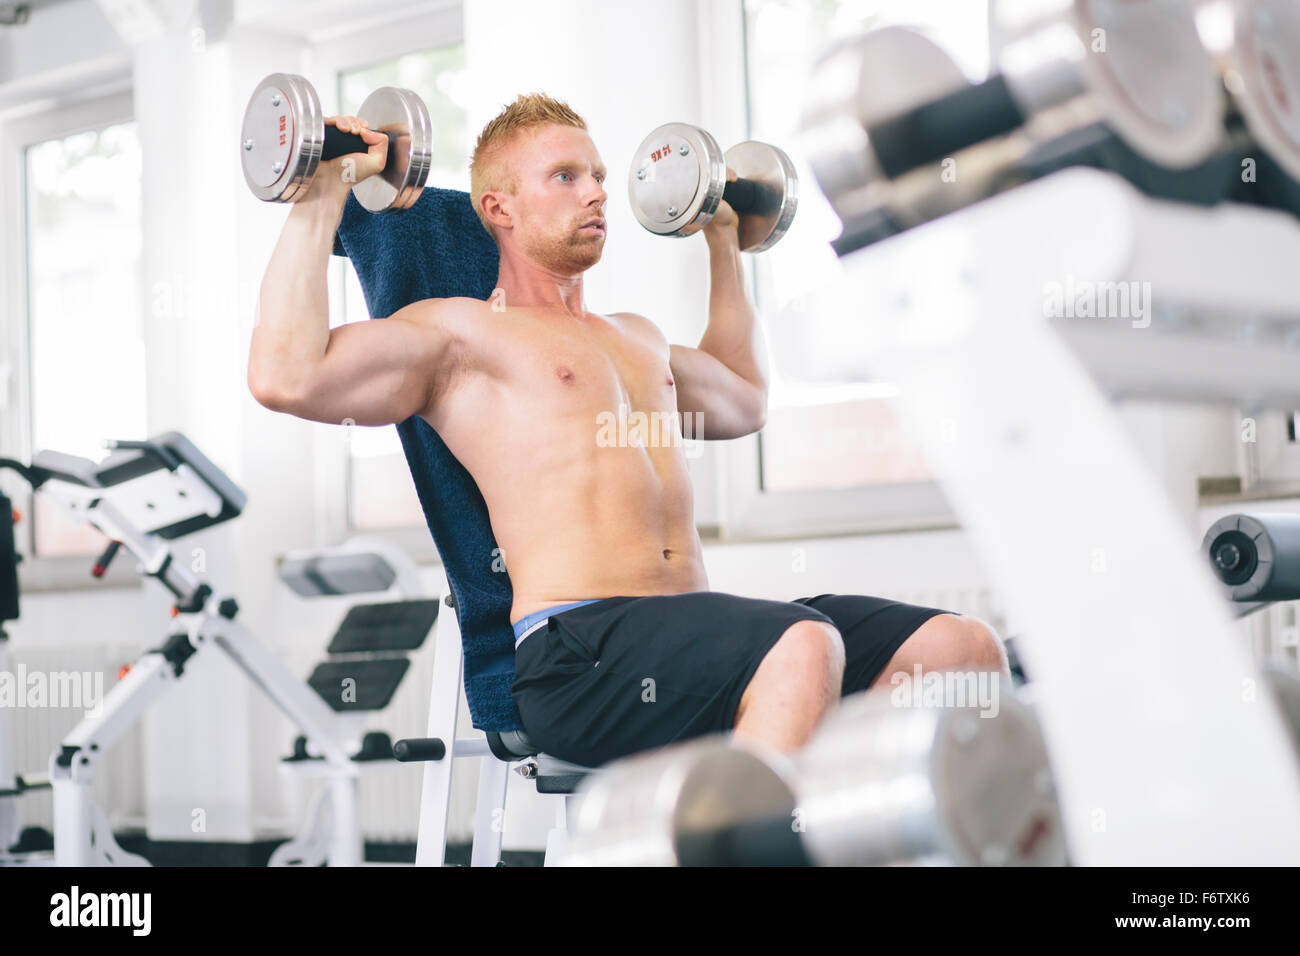 Physical athlete exercising with dumbbells Stock Photo